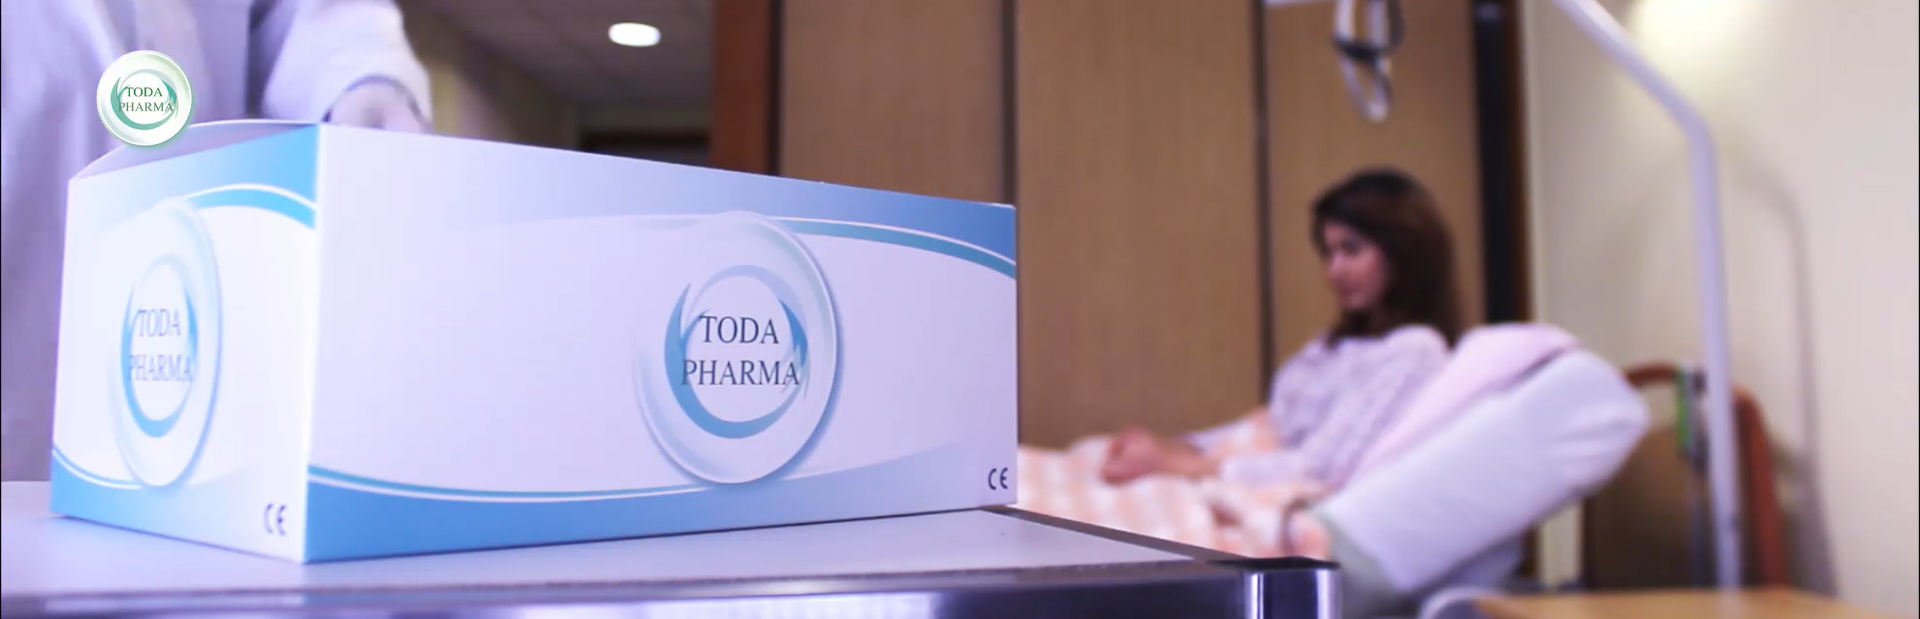 Toda Pharma Group